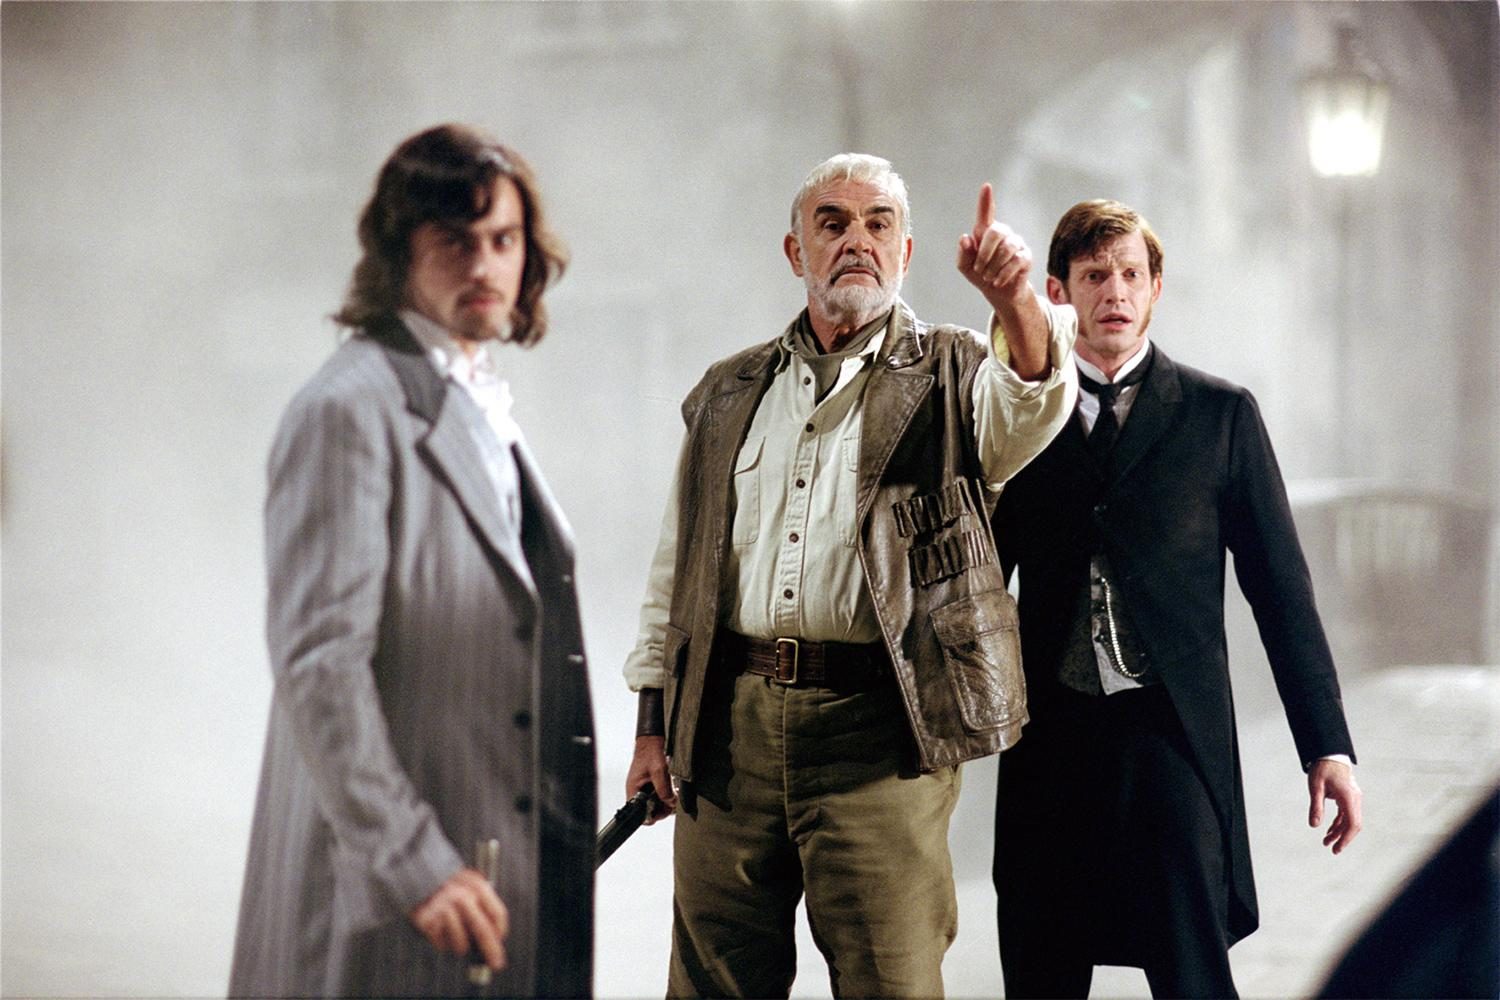 Sean Connery in "The League of Extraordinary Gentlemen" (2003)